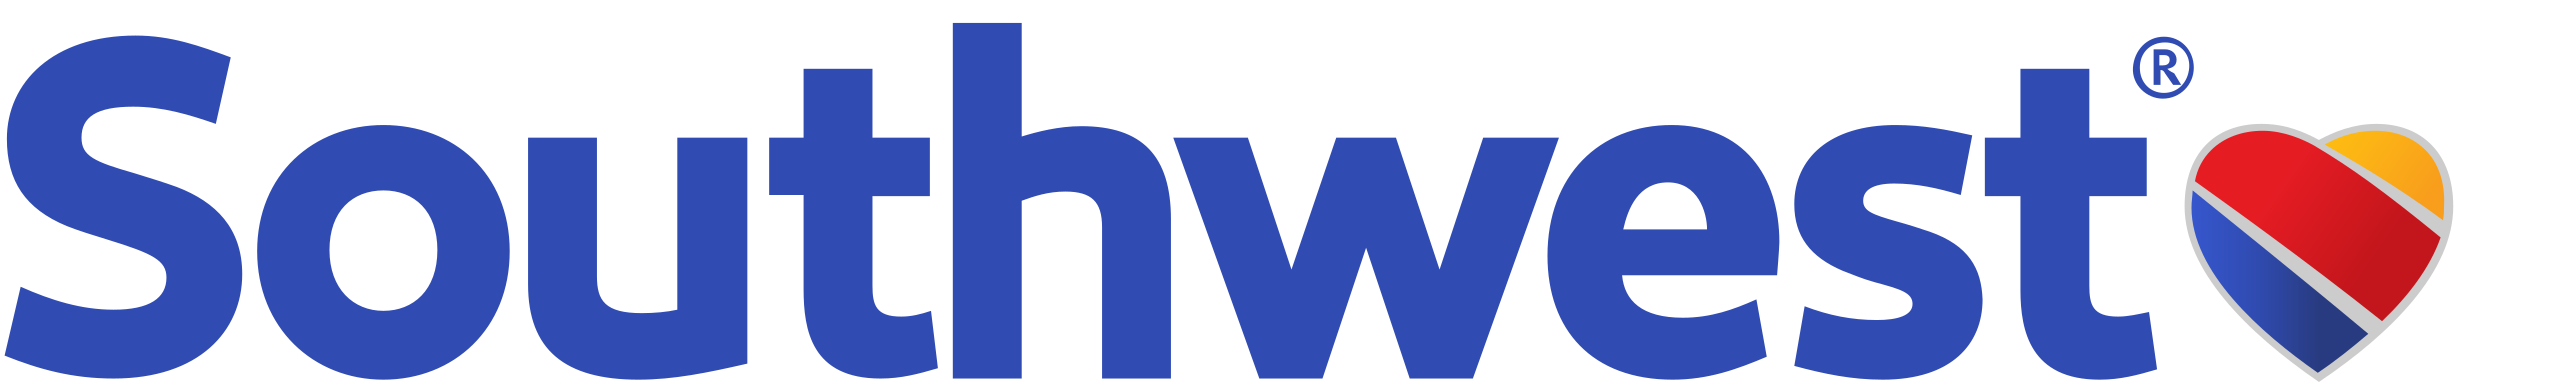 2560px-Southwest_Airlines_logo_2014.svg